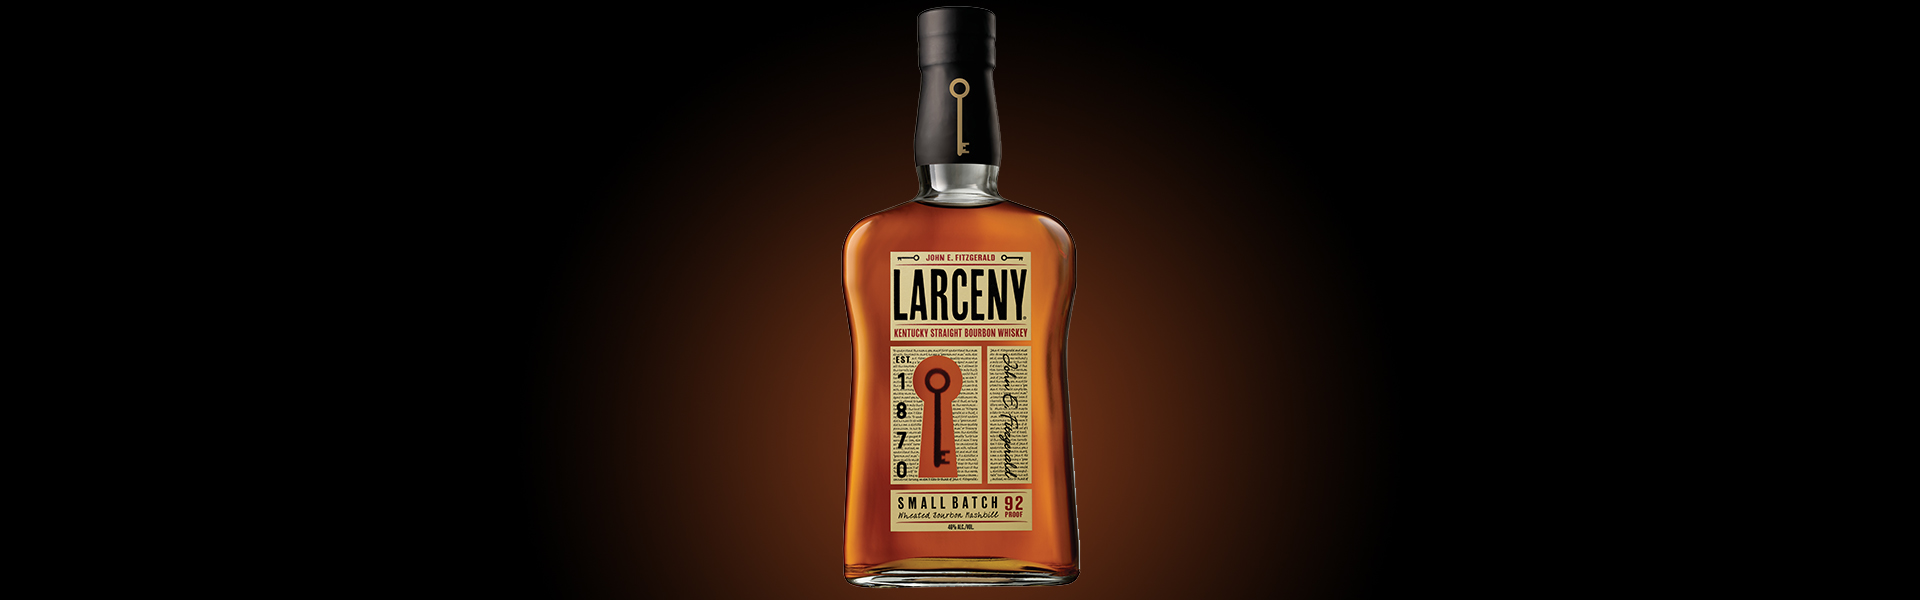 Larceny Wheated Bourbon – Nyhet på Systembolaget 1:a juni.